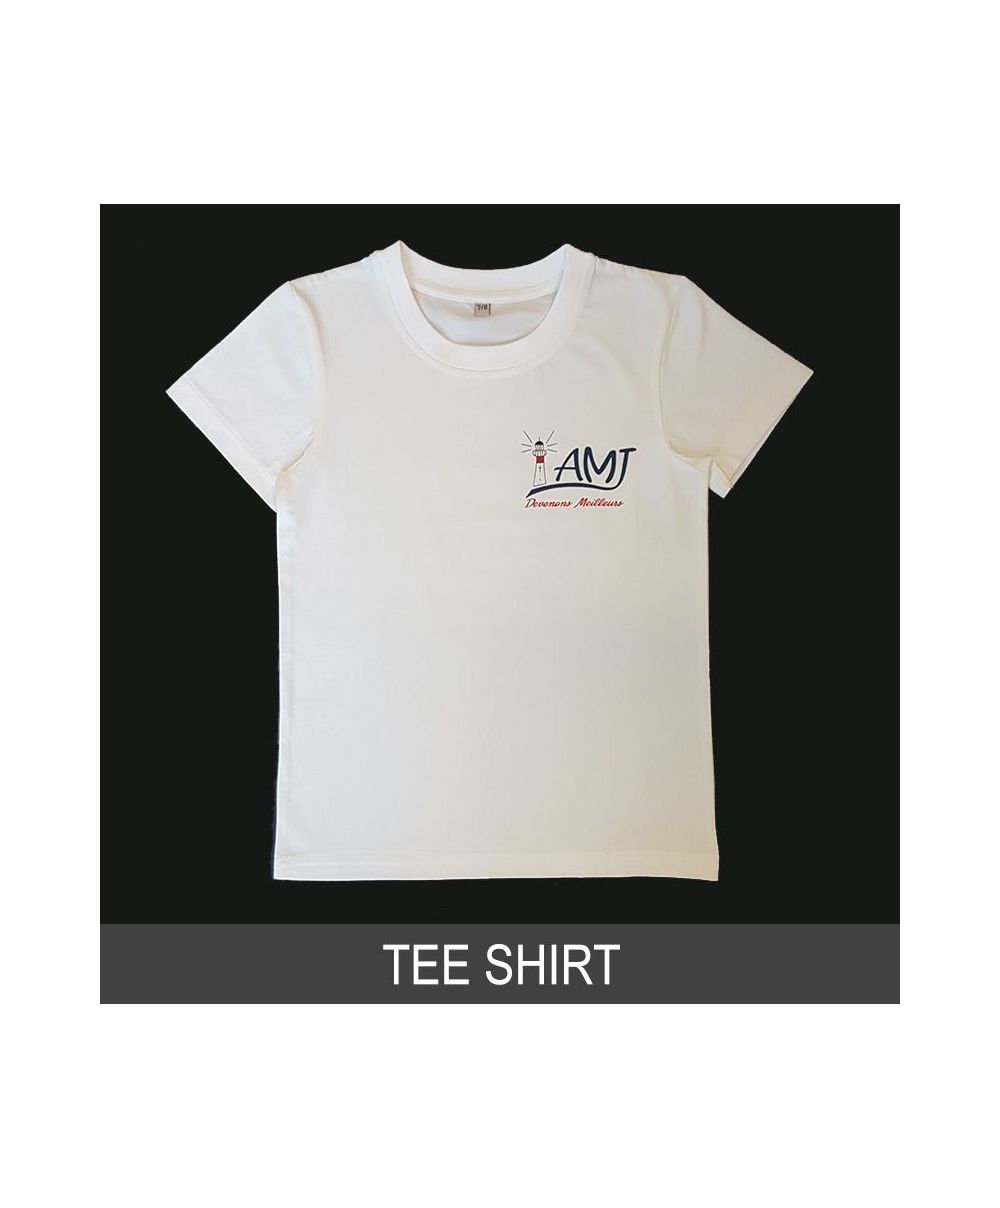 Mixte - Tee Shirt - Ecole Anne-Marie Javouhey (AMJ)